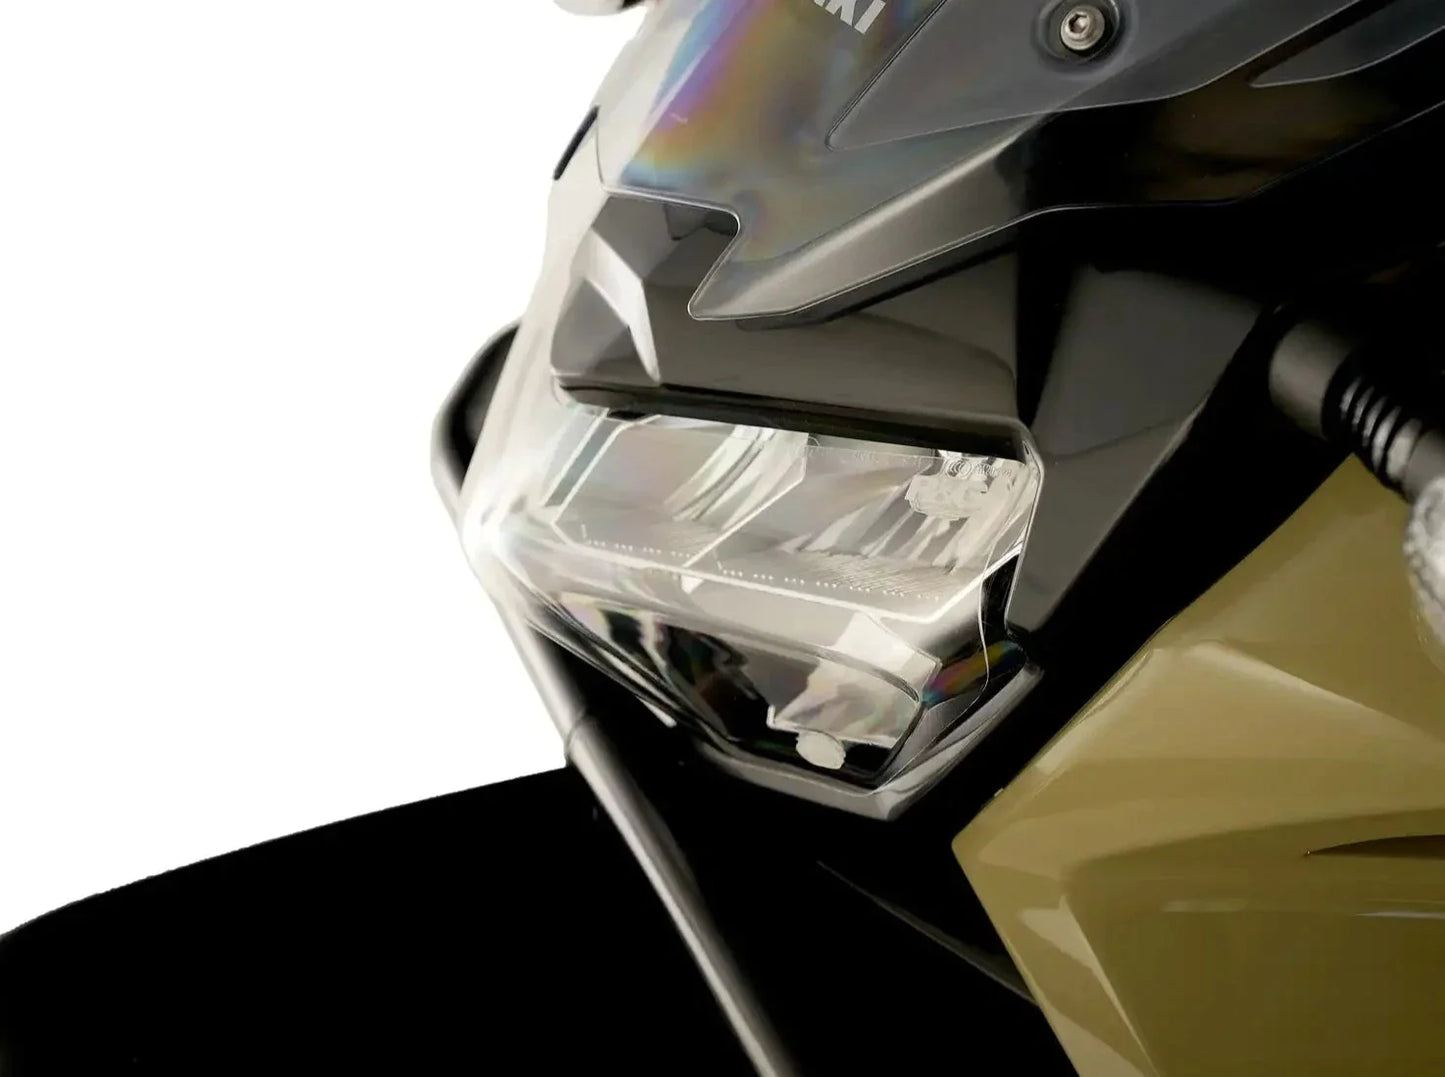 HLS0157 - R&G RACING Kawasaki KLR650 (2022+) Headlight Guard